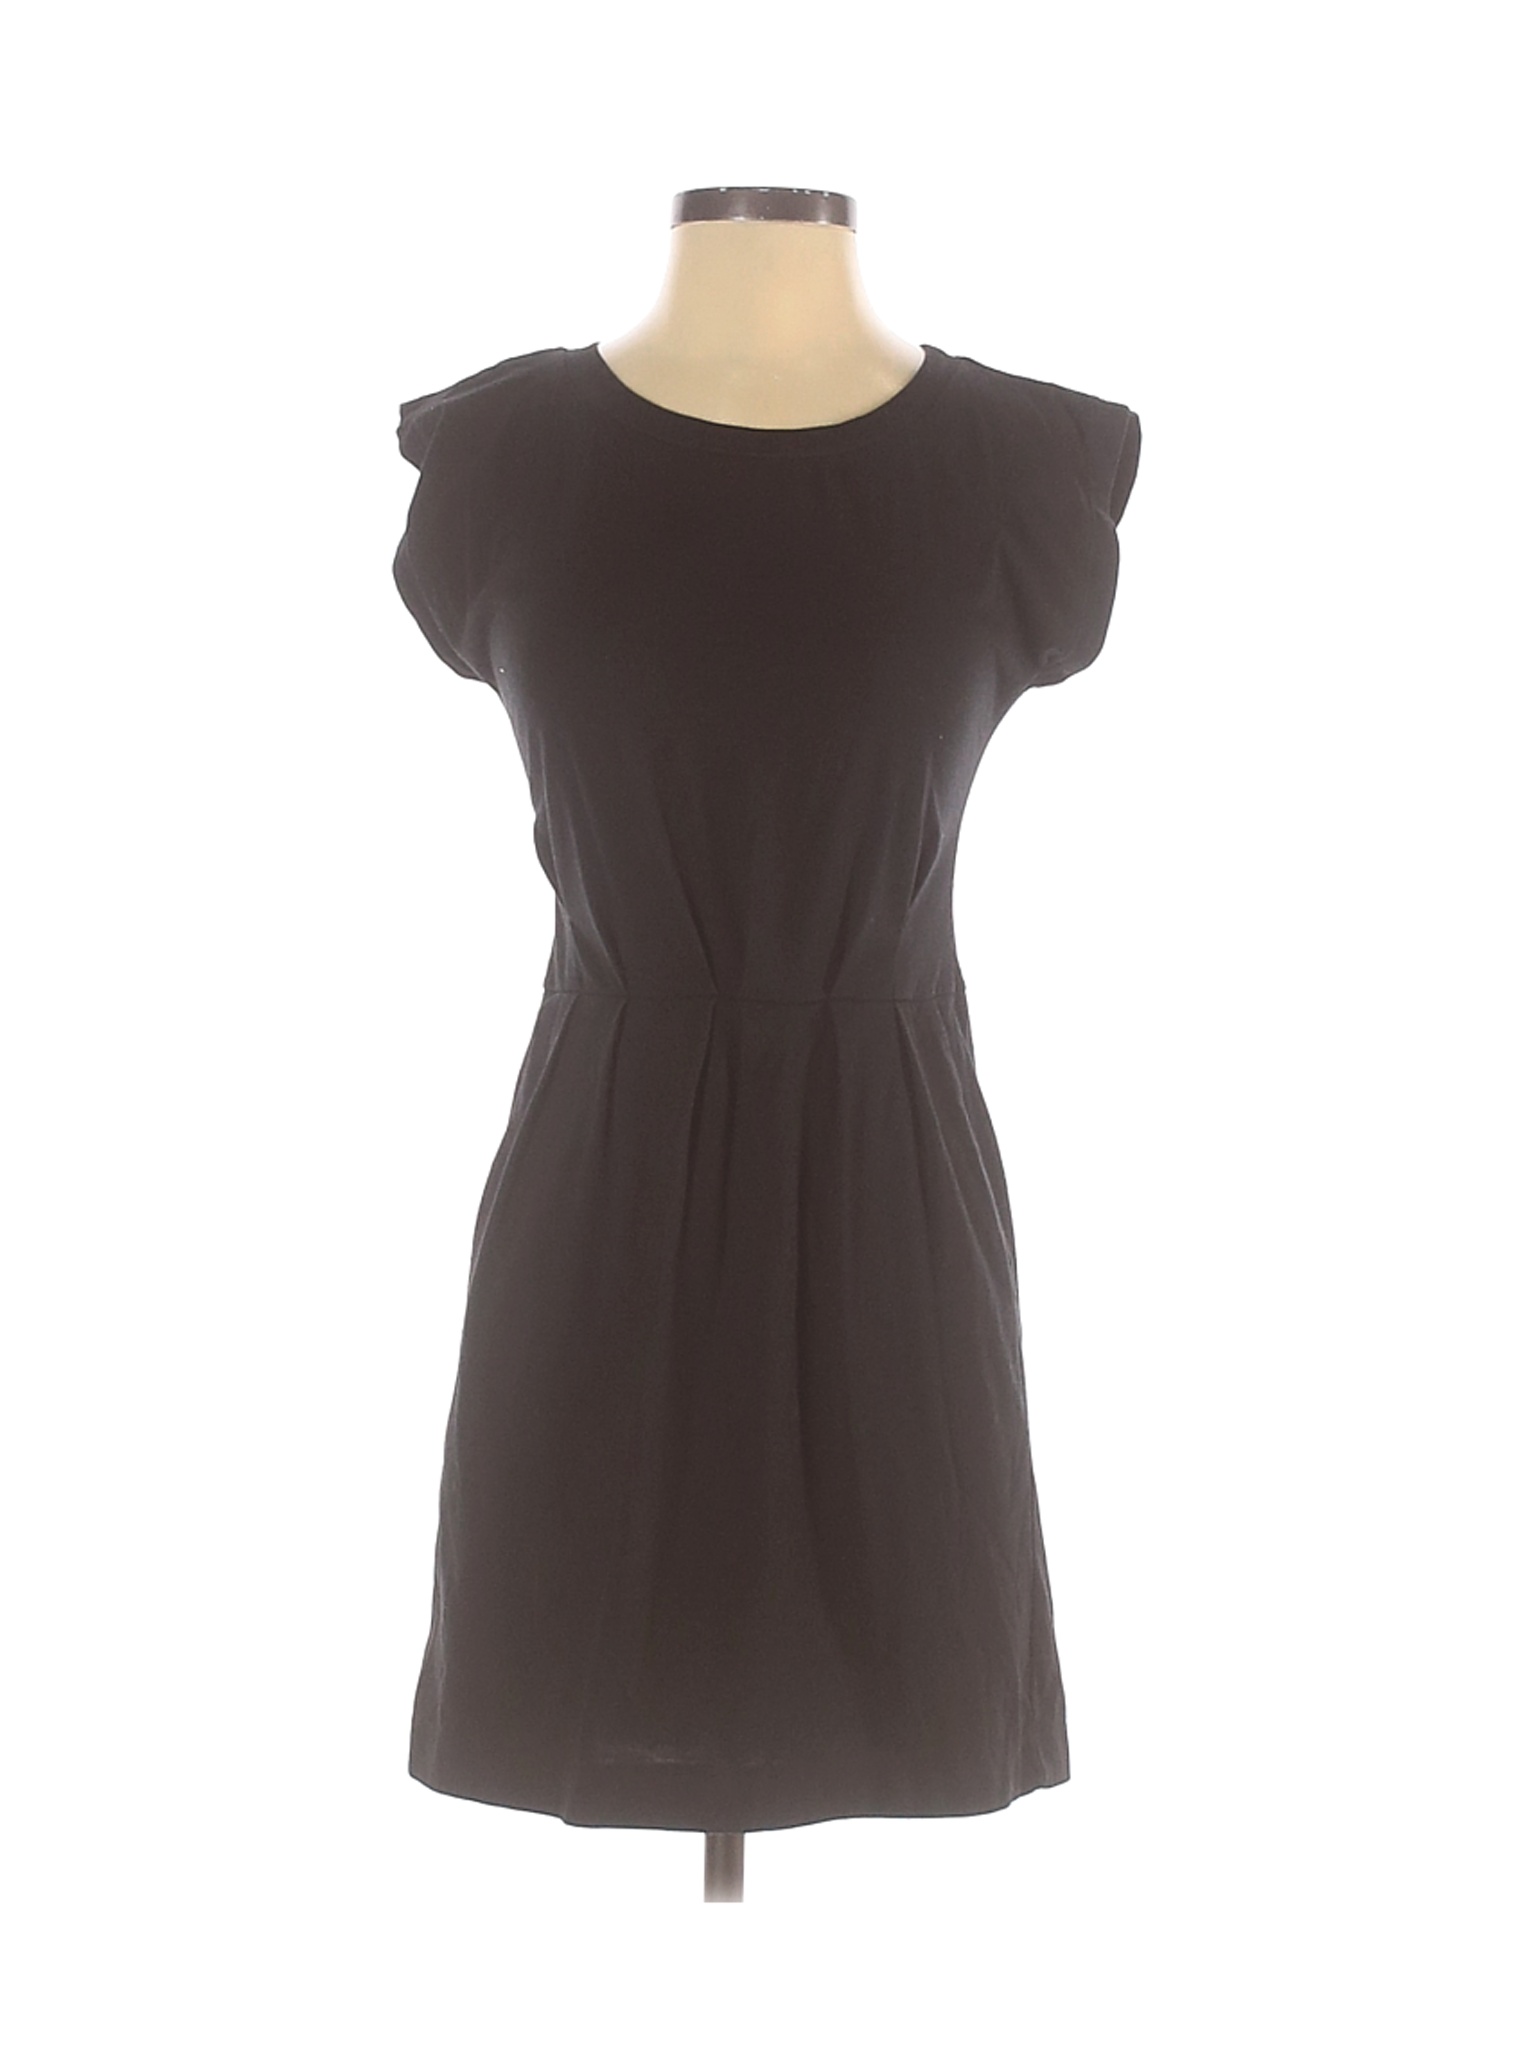 Cotton On Women Brown Casual Dress S | eBay